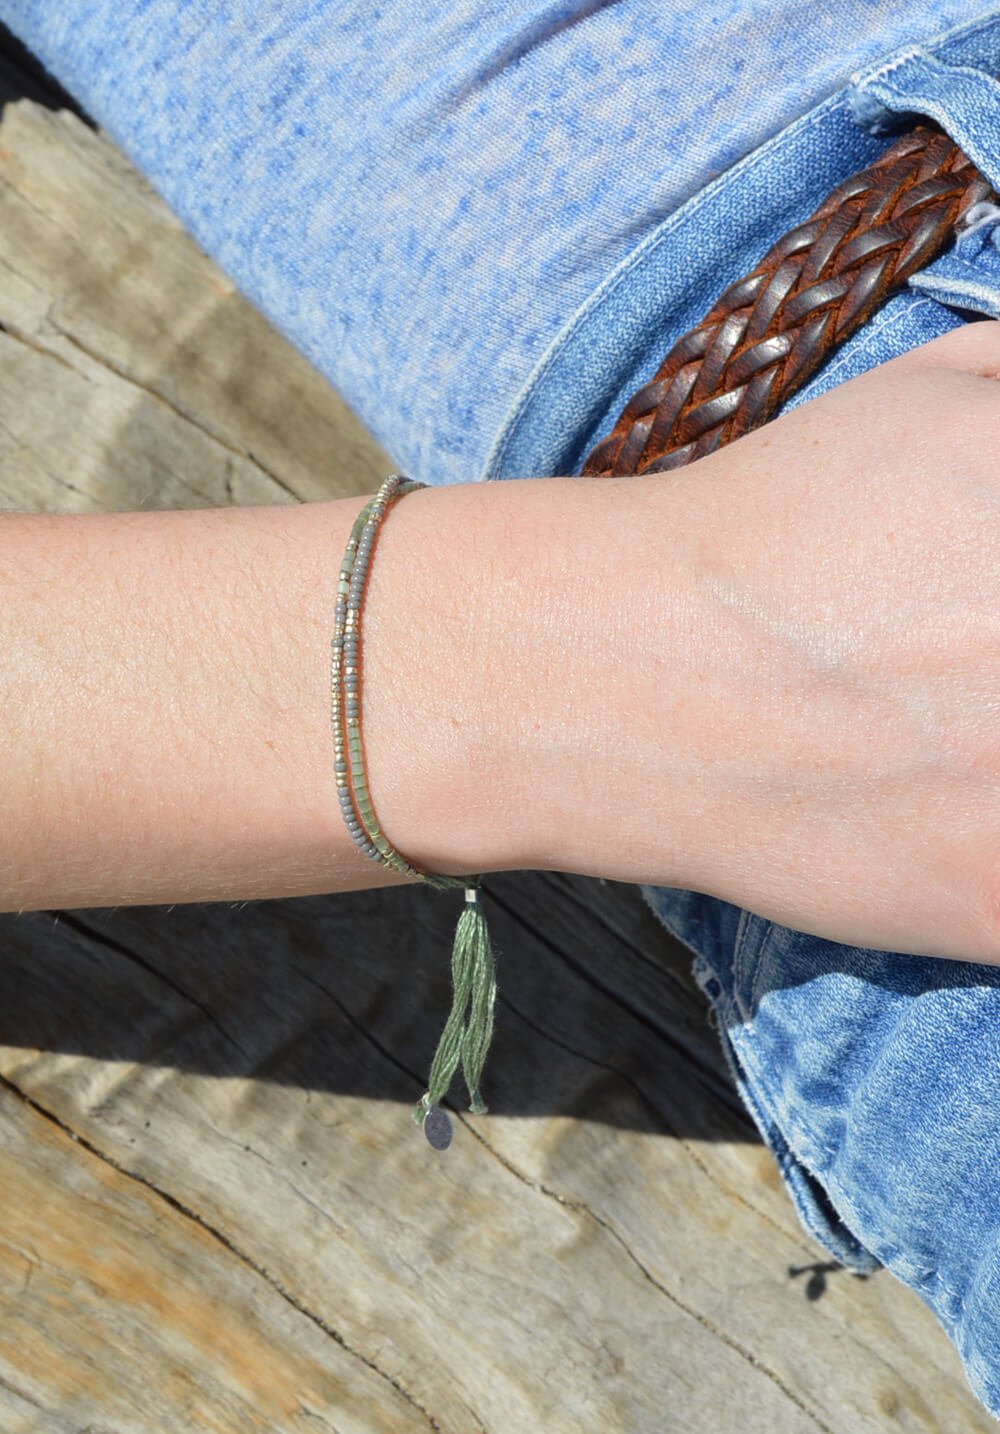 thread bracelet - seafoam silver